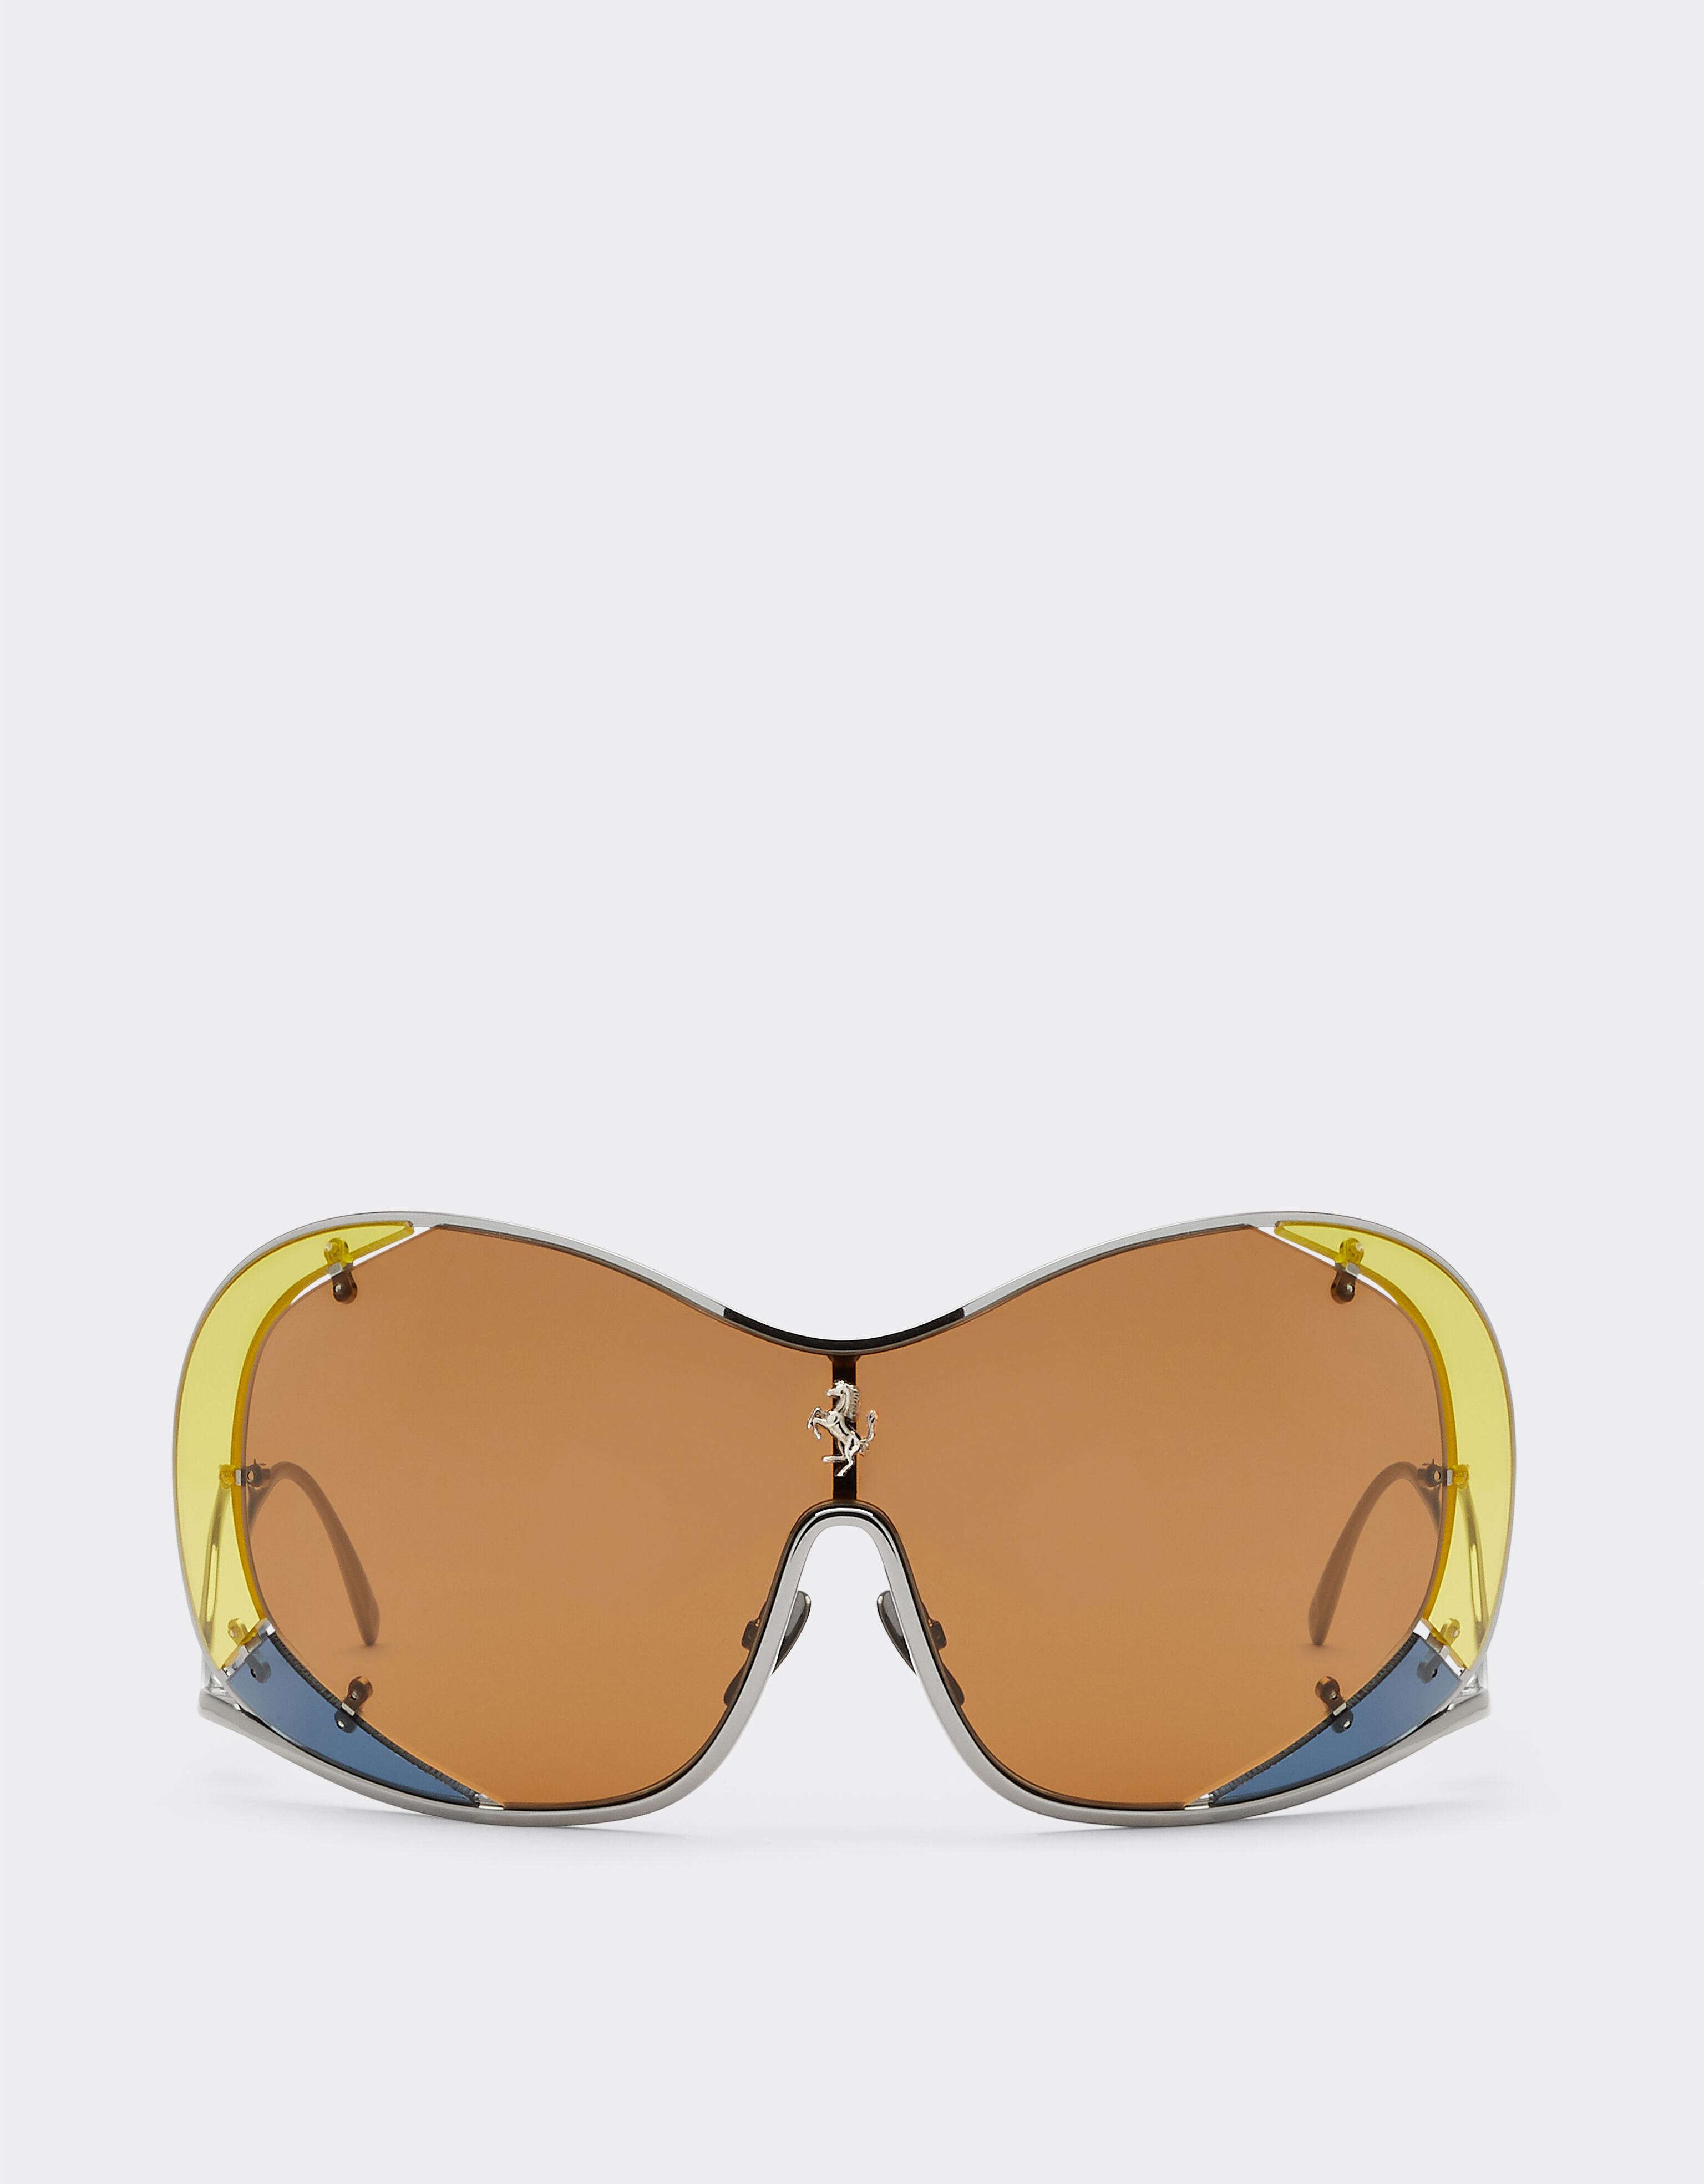 Ferrari Ferrari sunglasses with brown lenses Black F1201f